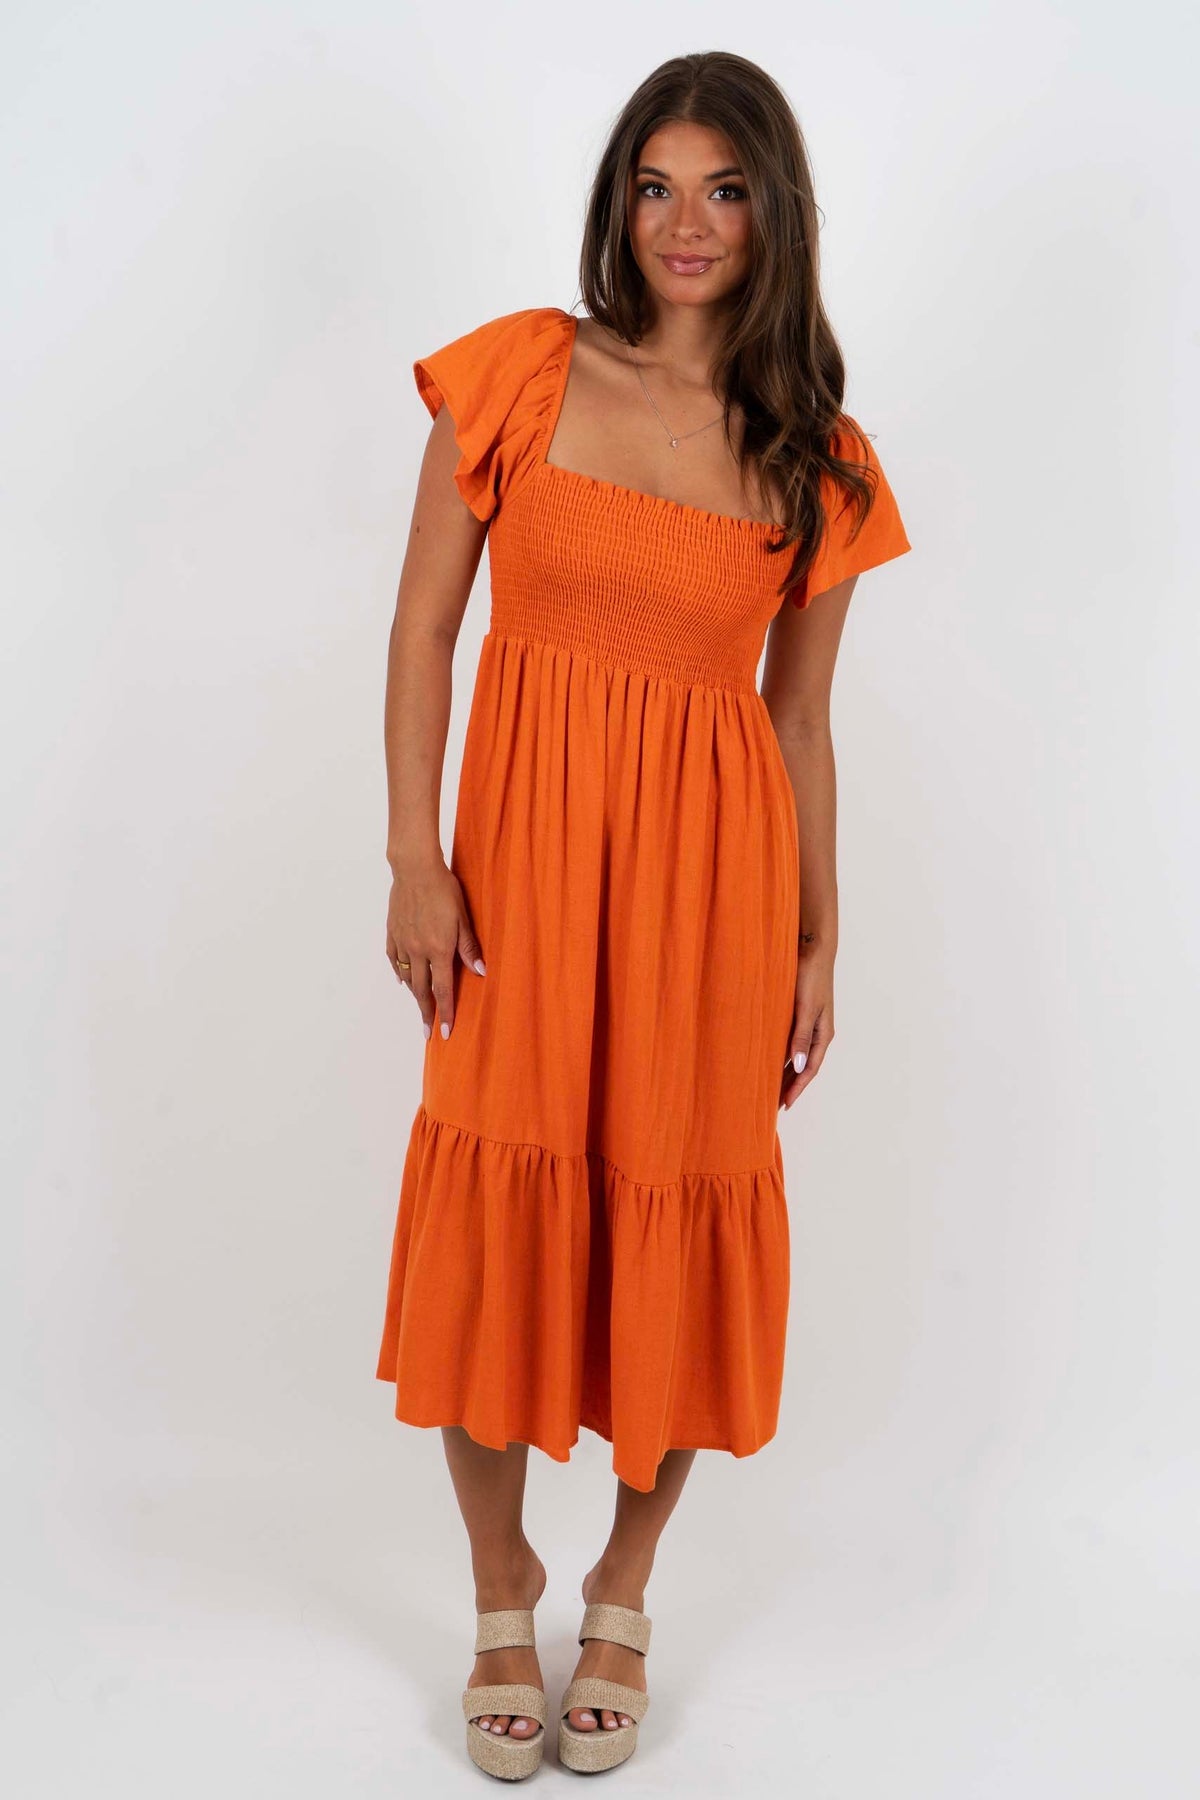 In Love With You Midi Dress (Orange)